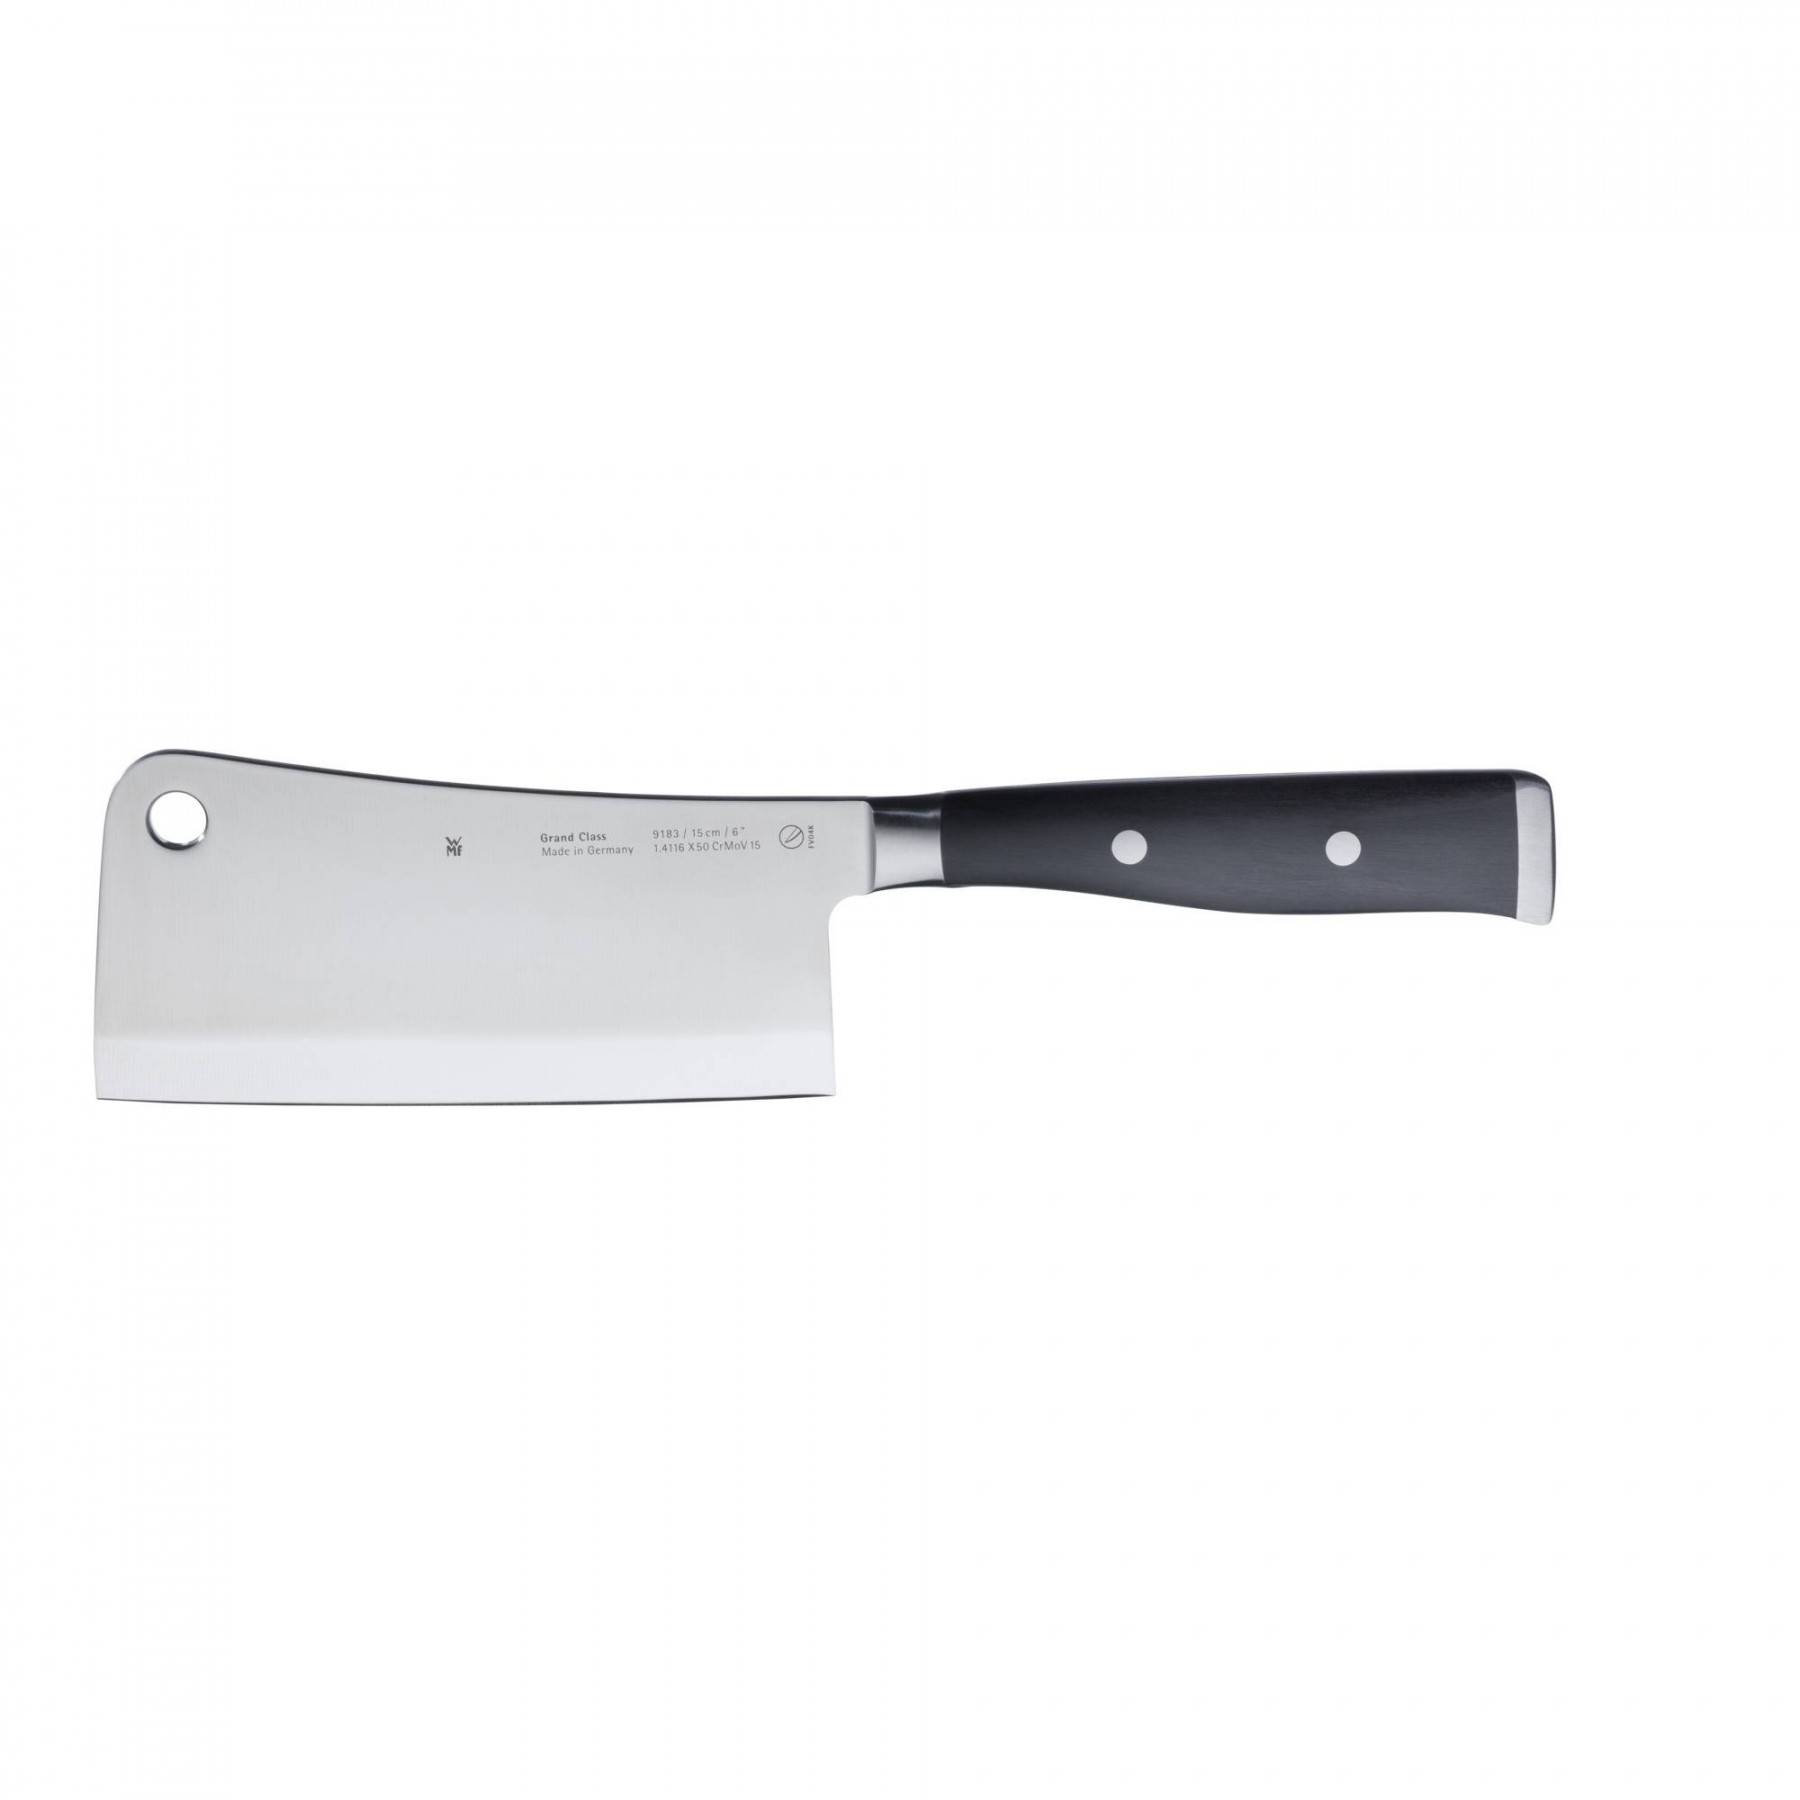 WMF Grand Class Поварской китайский нож, лезвие 15 см (1891836032) WMF - spb.v-b.ru